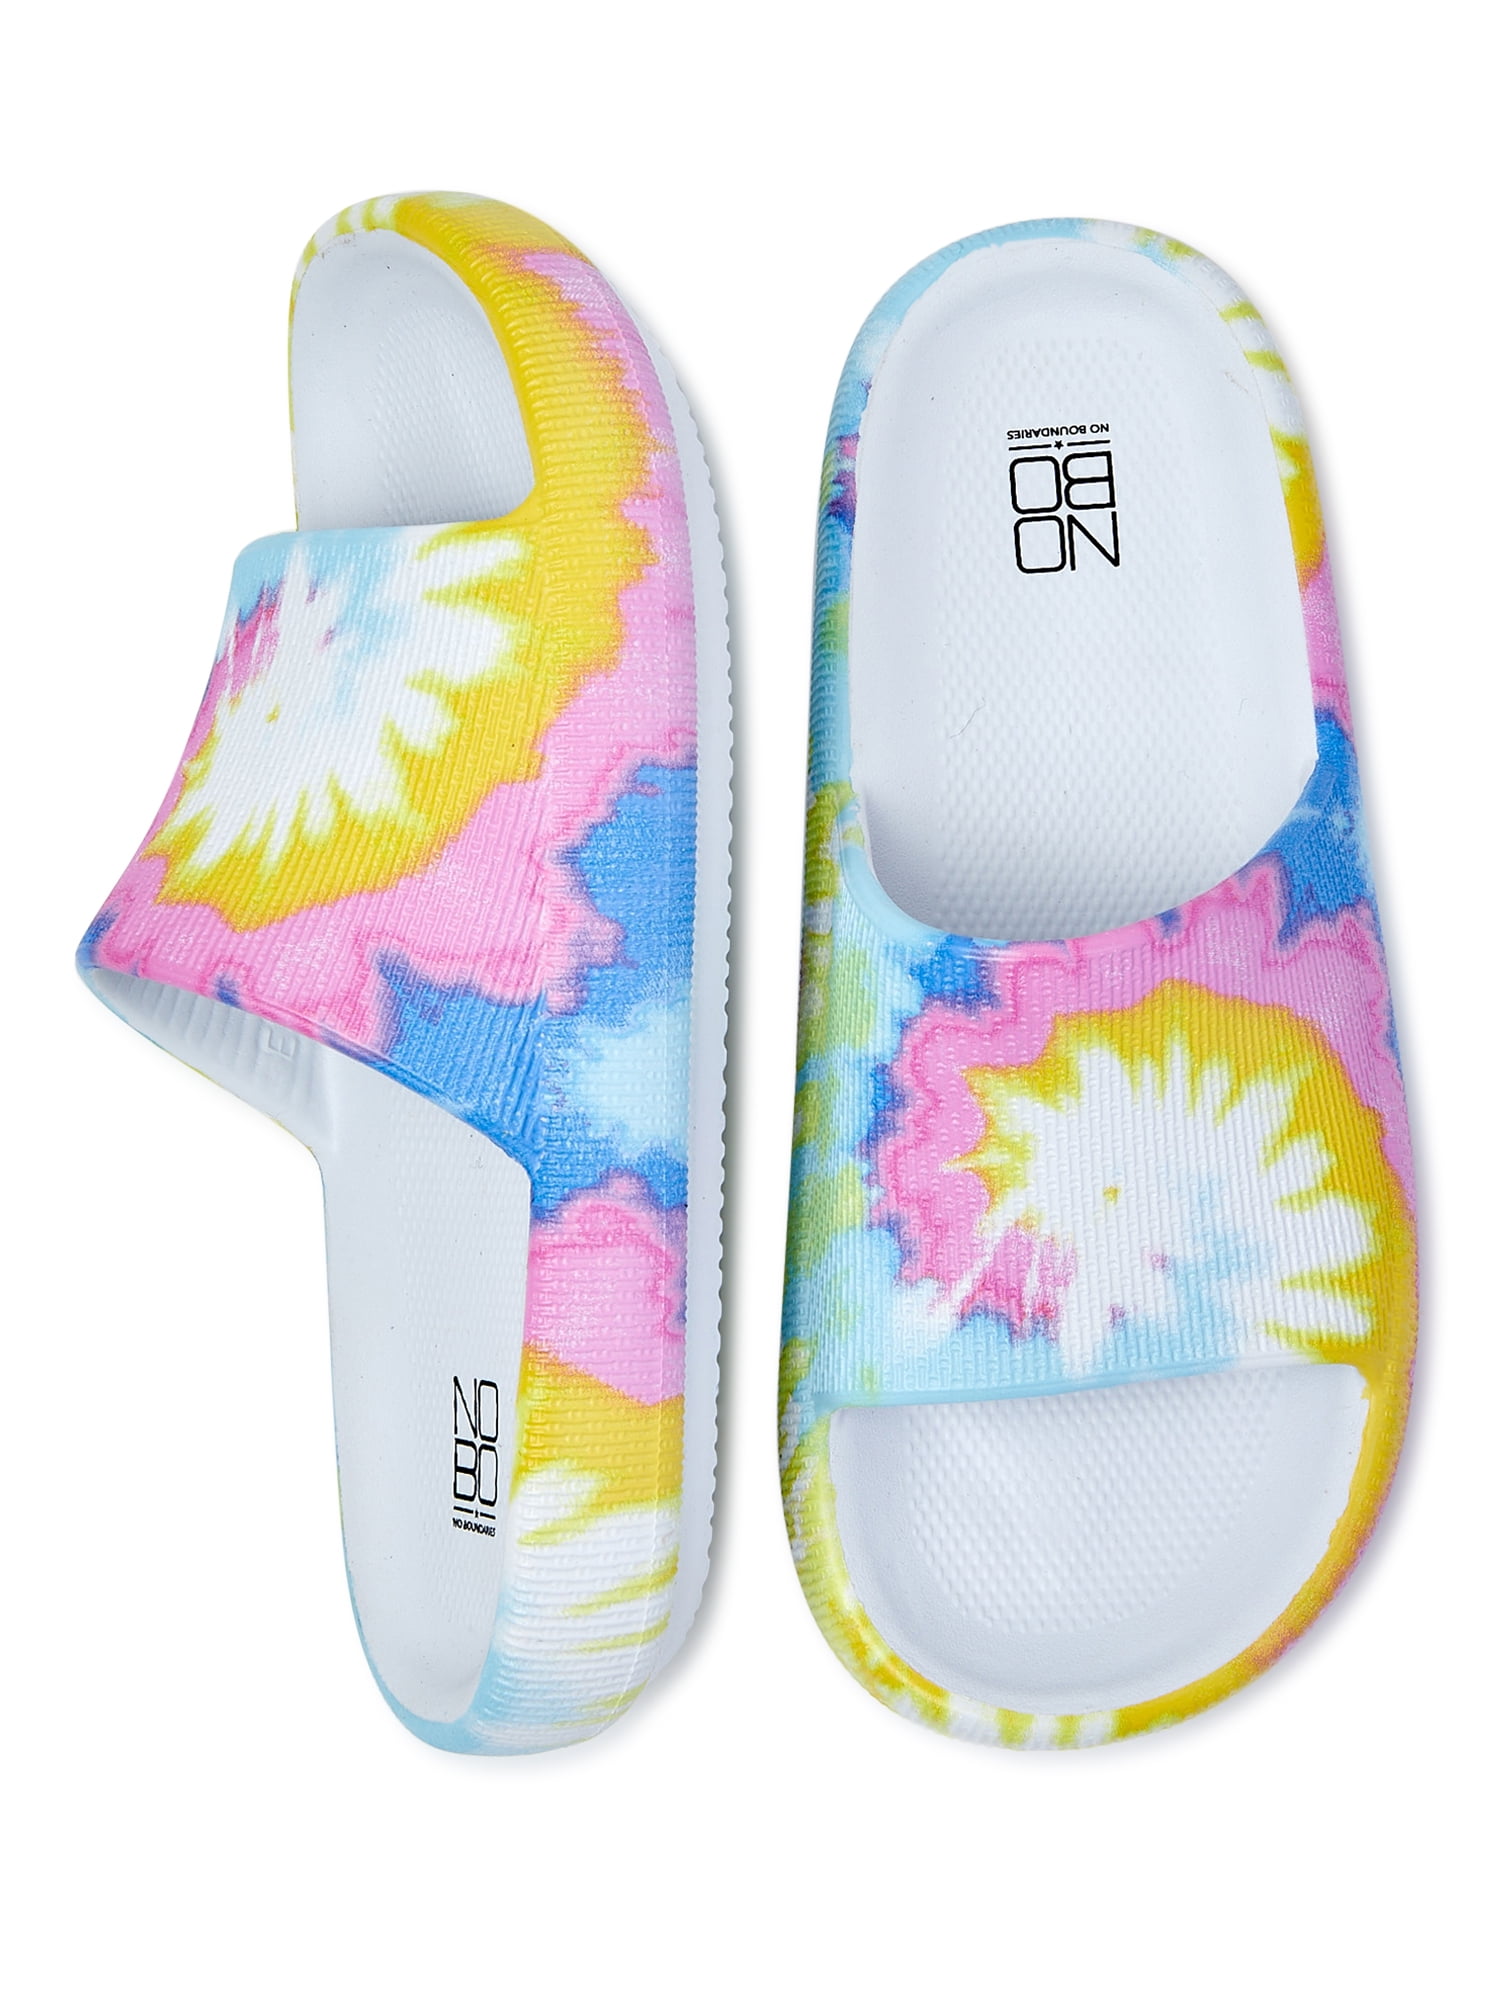 Ladies Ellesse Sliders Sandals Shoes SlipOns Sports Beach Garden Flip Flop Pink 